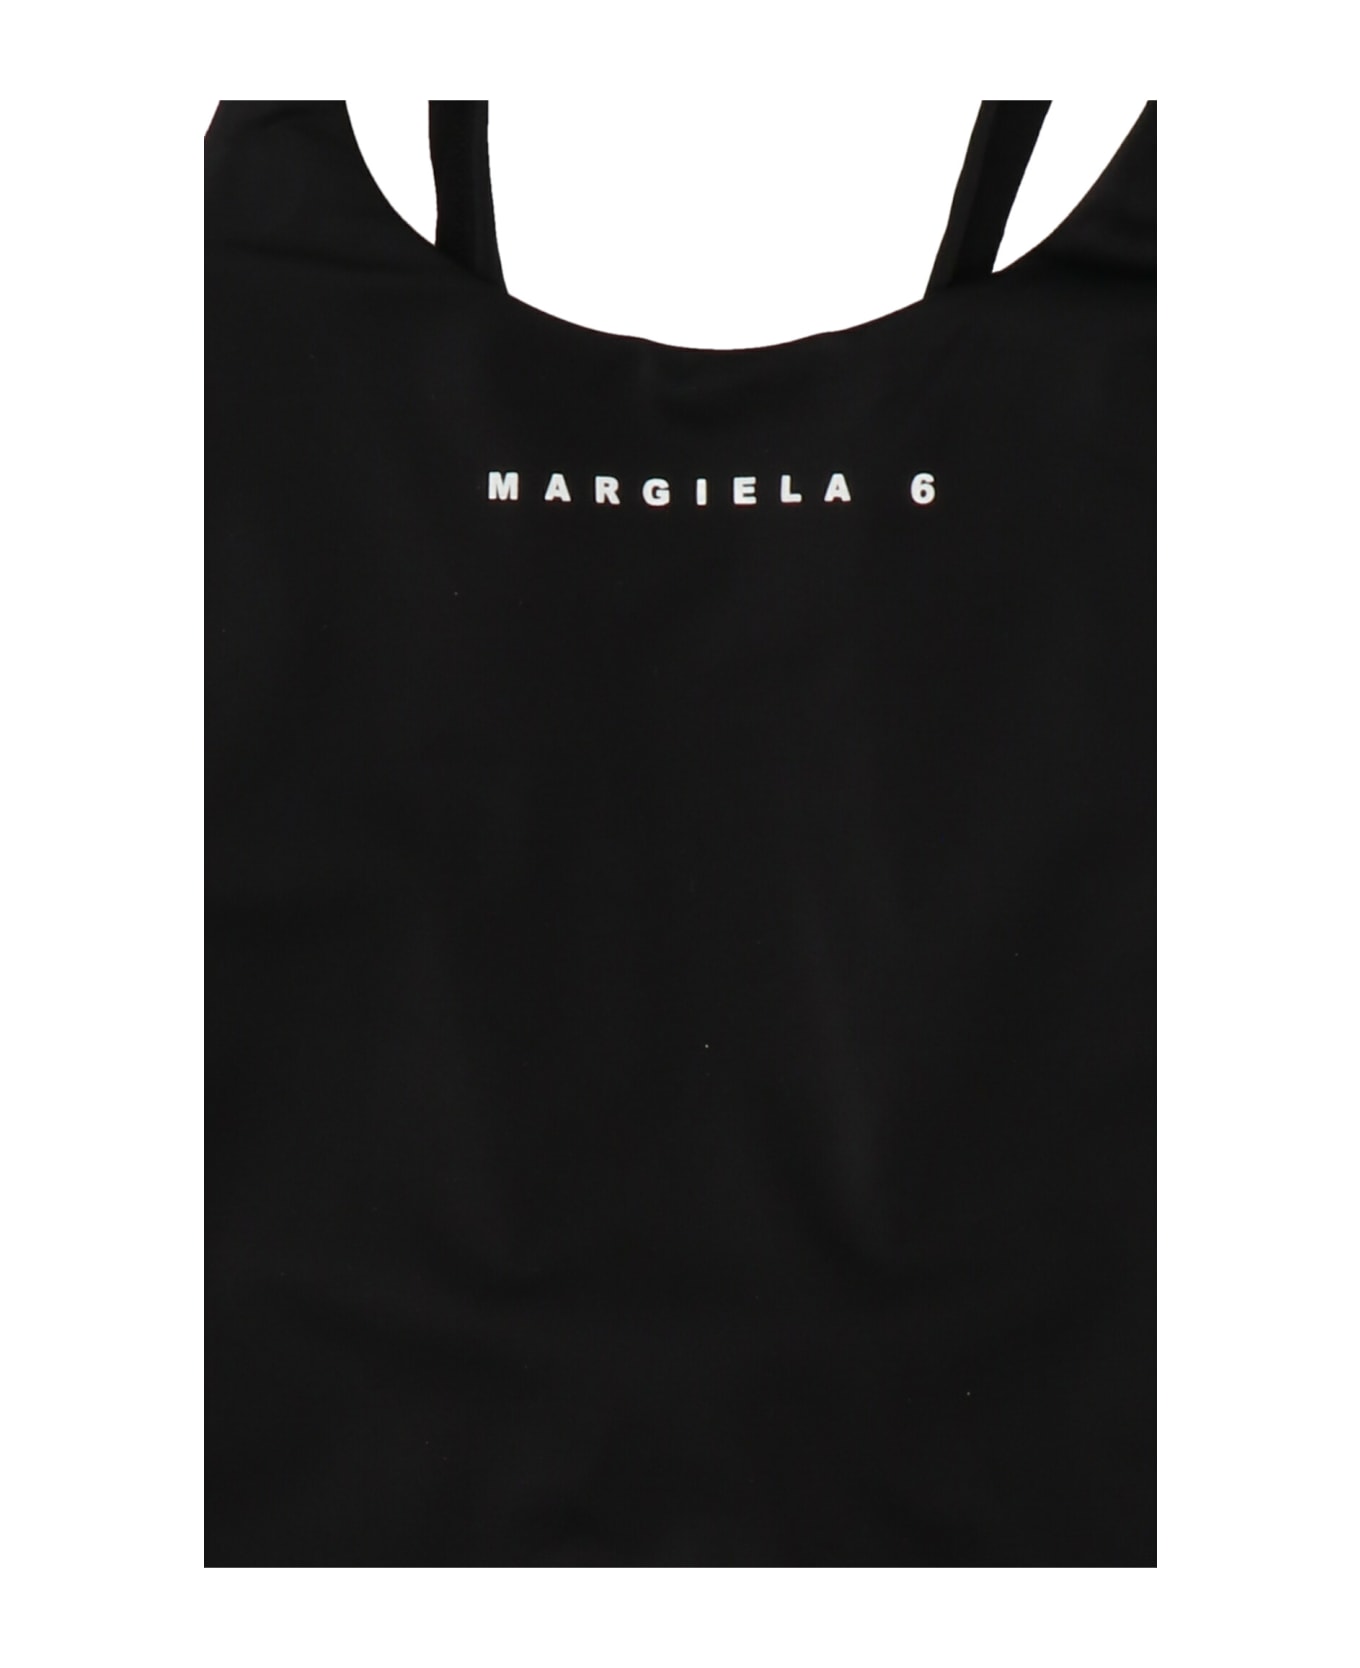 MM6 Maison Margiela Logo Print One-piece Swimsuit - Black  